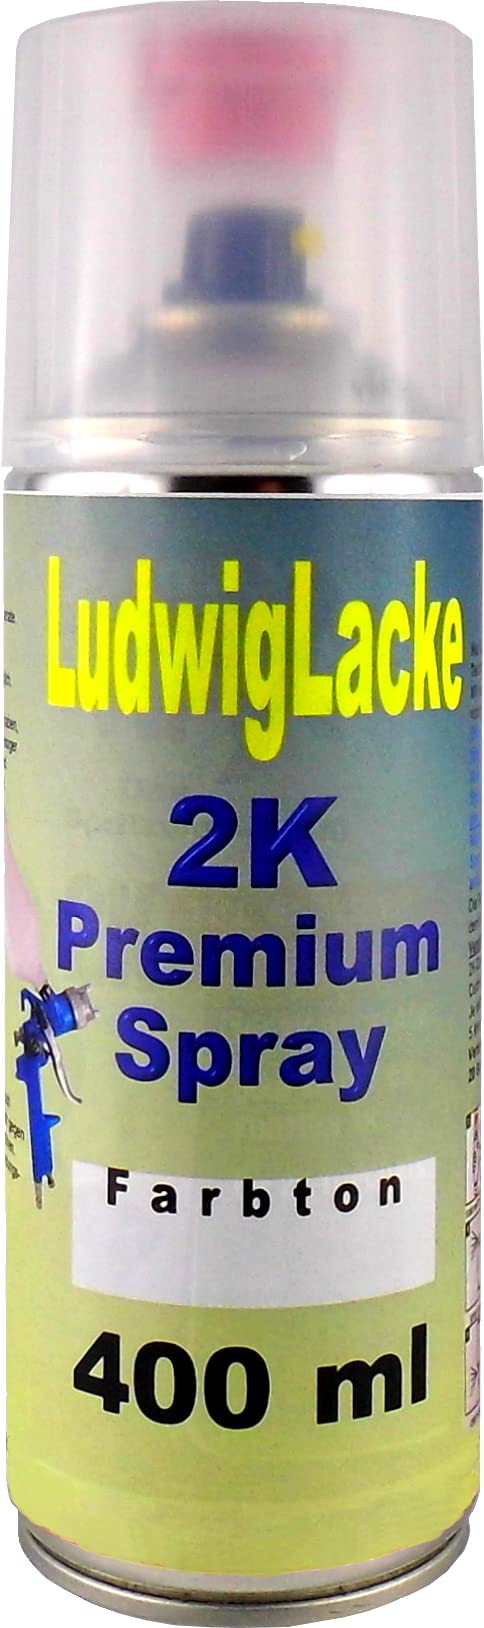 Ludwig Lacke RAL 9005 TIEFSCHWARZ 2K Premium Spray 400ml von Ludwig Lacke